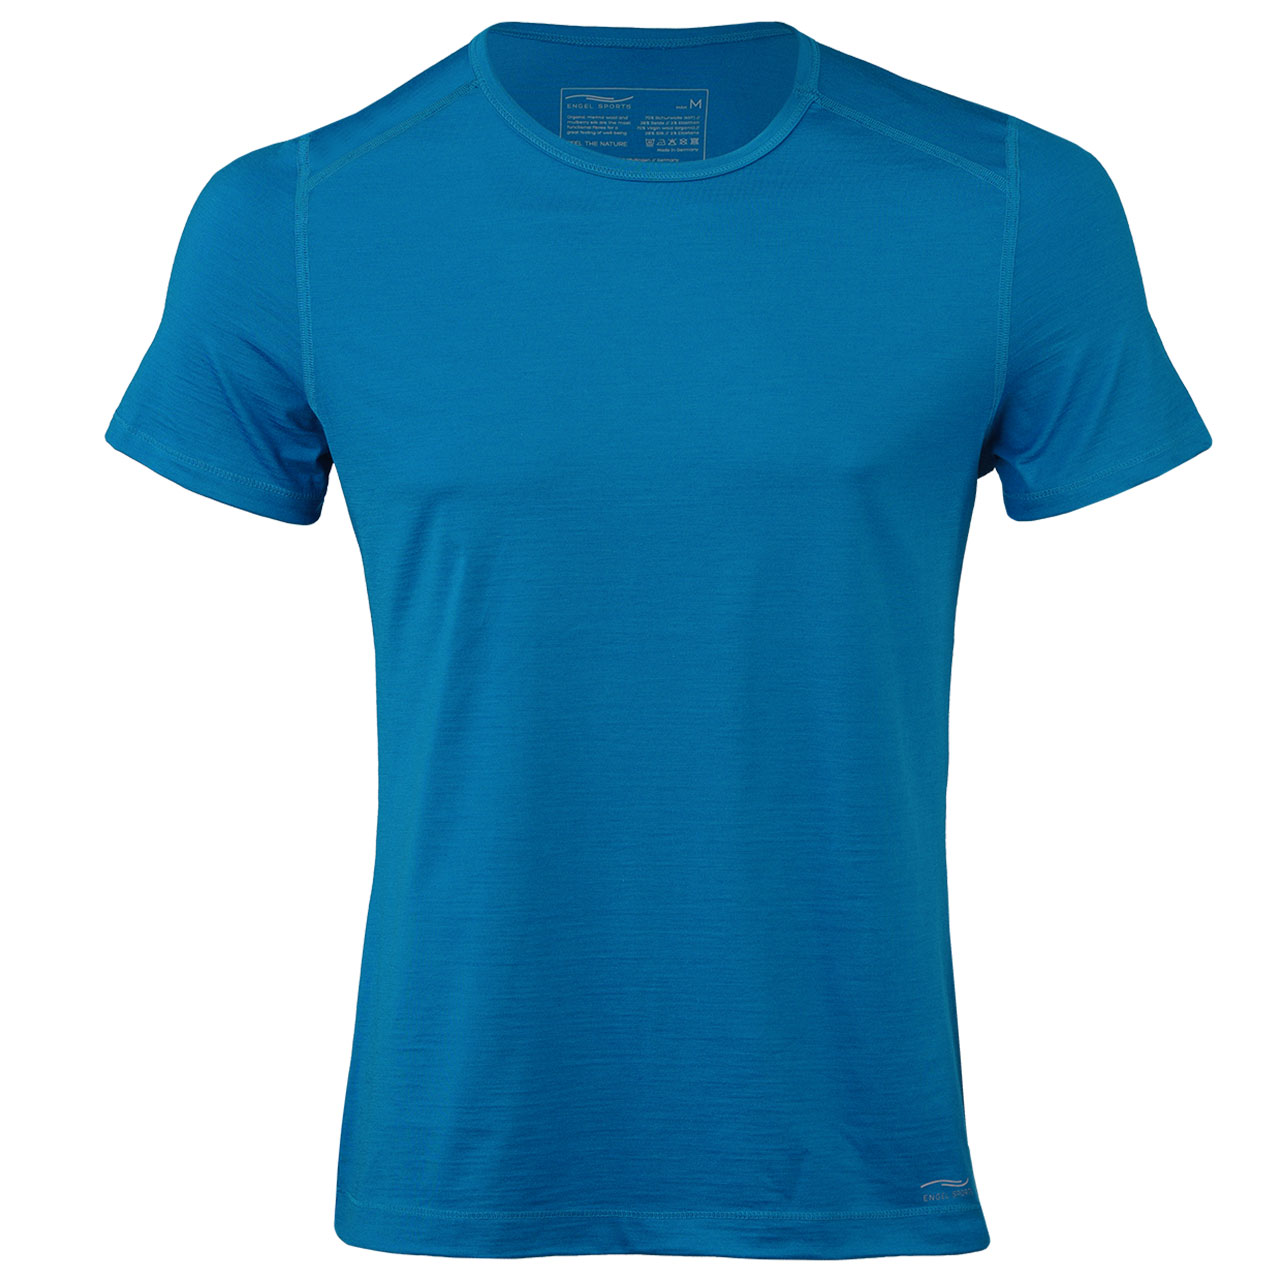 Herren Wolle Seide T-Shirt Regular Fit blau